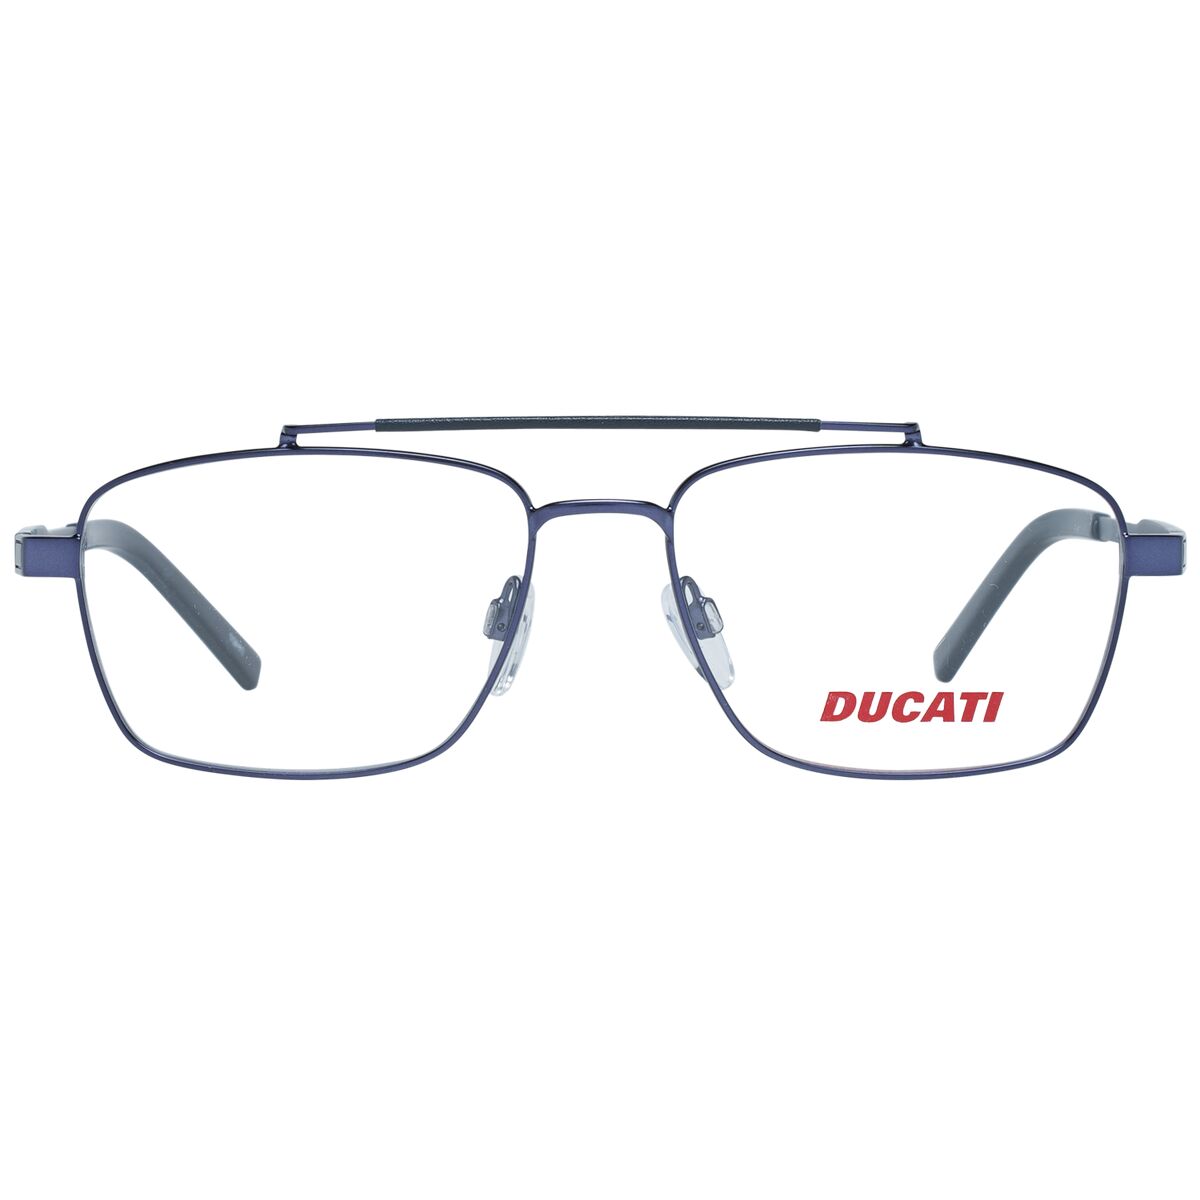 Kaufe Brillenfassung Ducati DA3019 54608 bei AWK Flagship um € 76.00